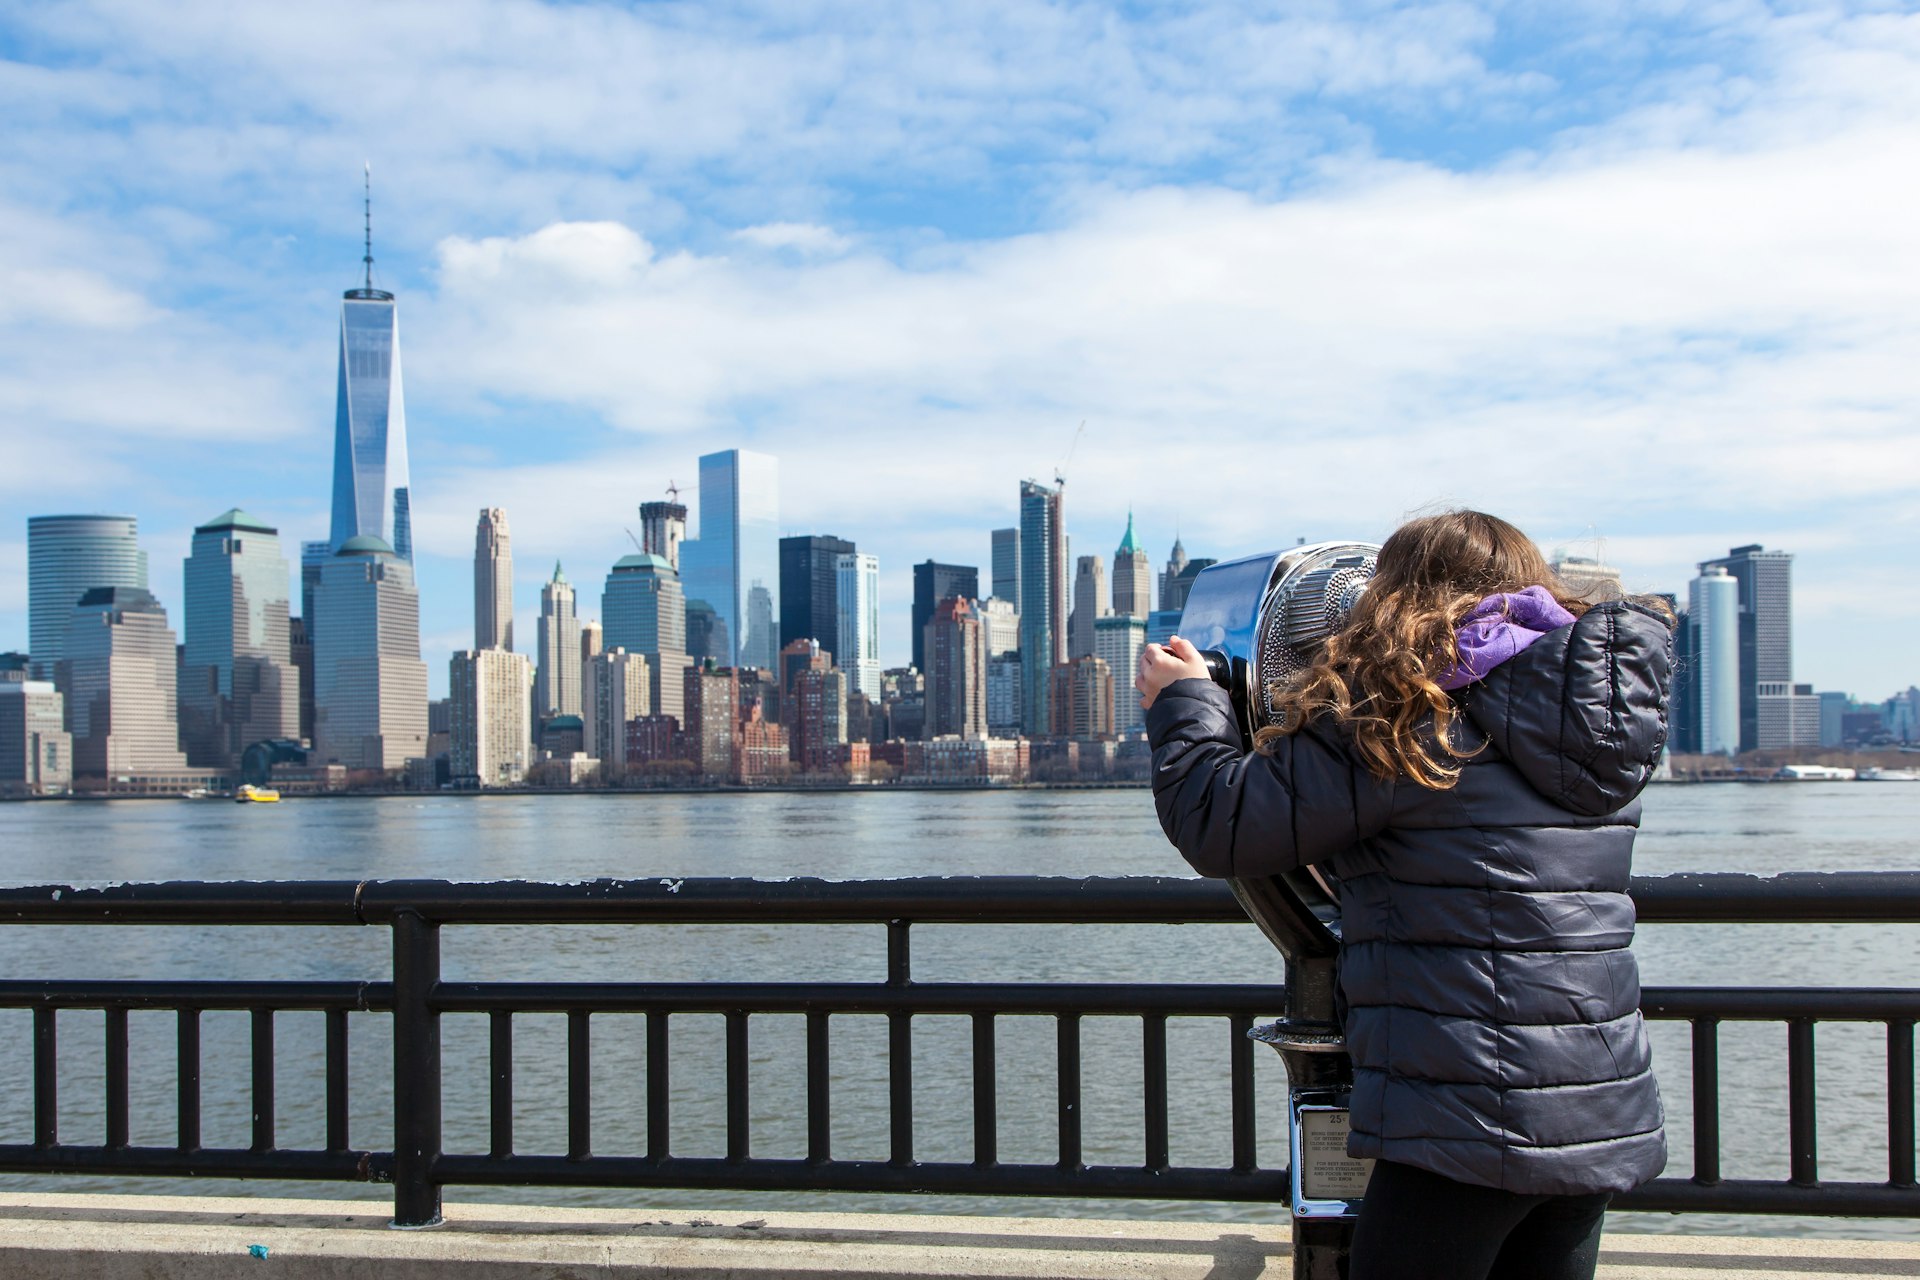 A little girl looks at the Manhattan skyline through binoculars at Liberty State Park